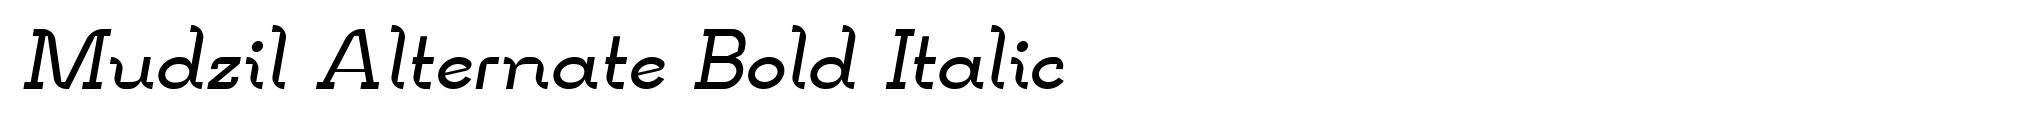 Mudzil Alternate Bold Italic image